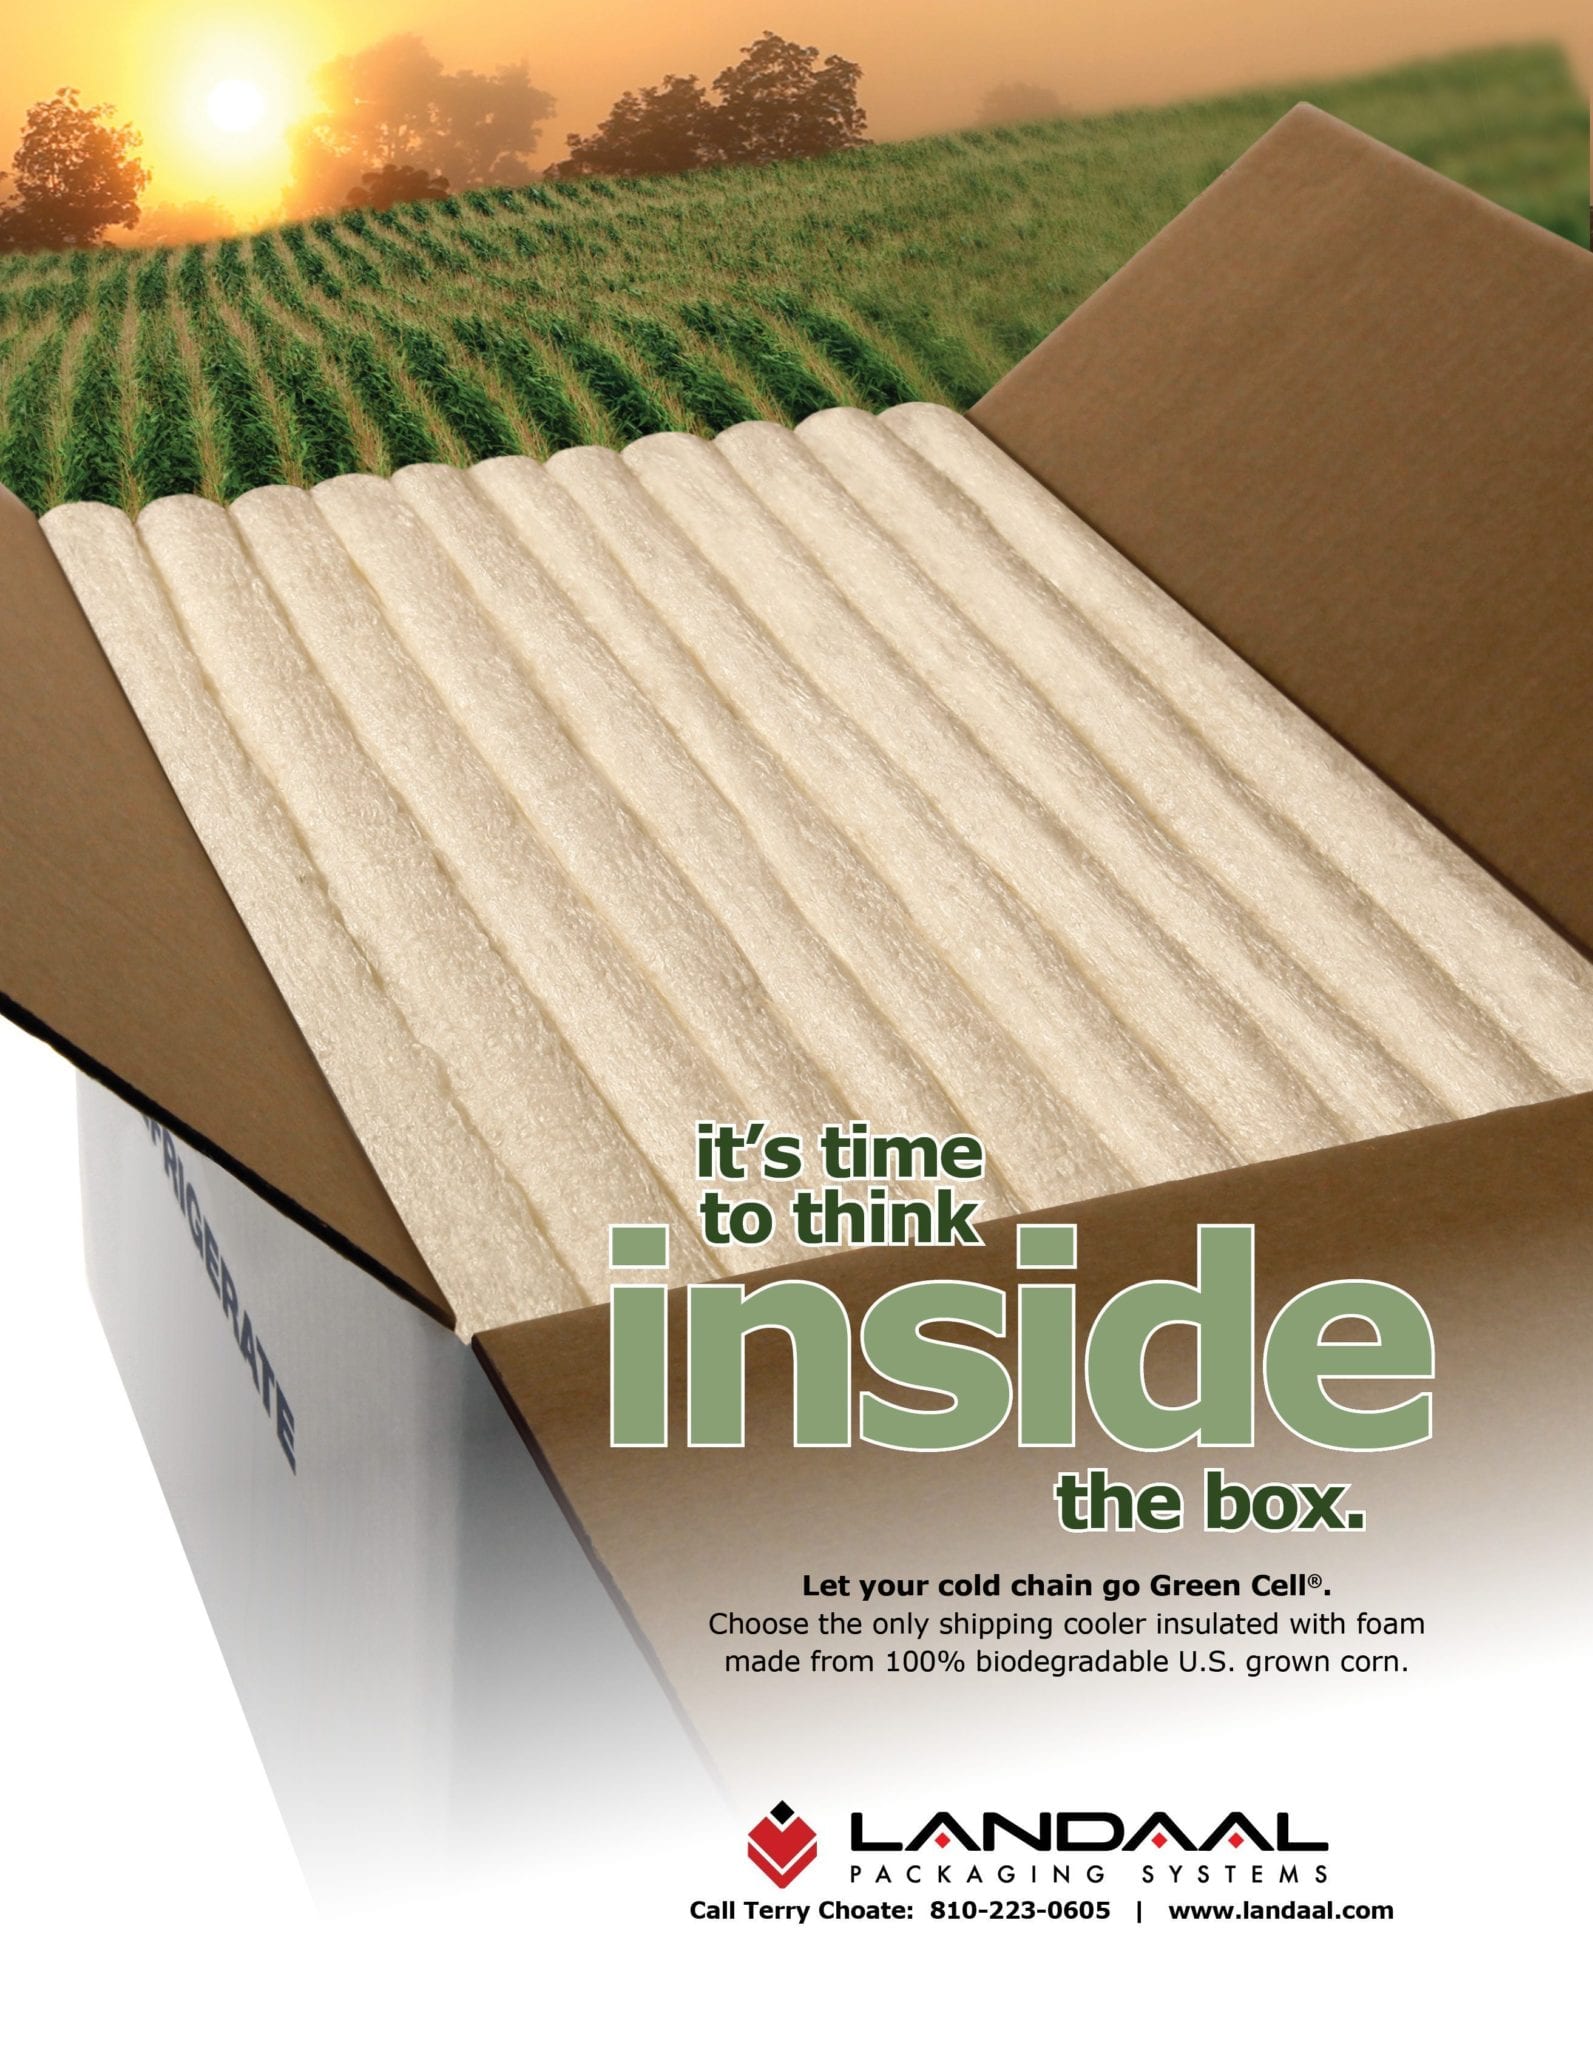 Sustainable Packaging, Green Packaging